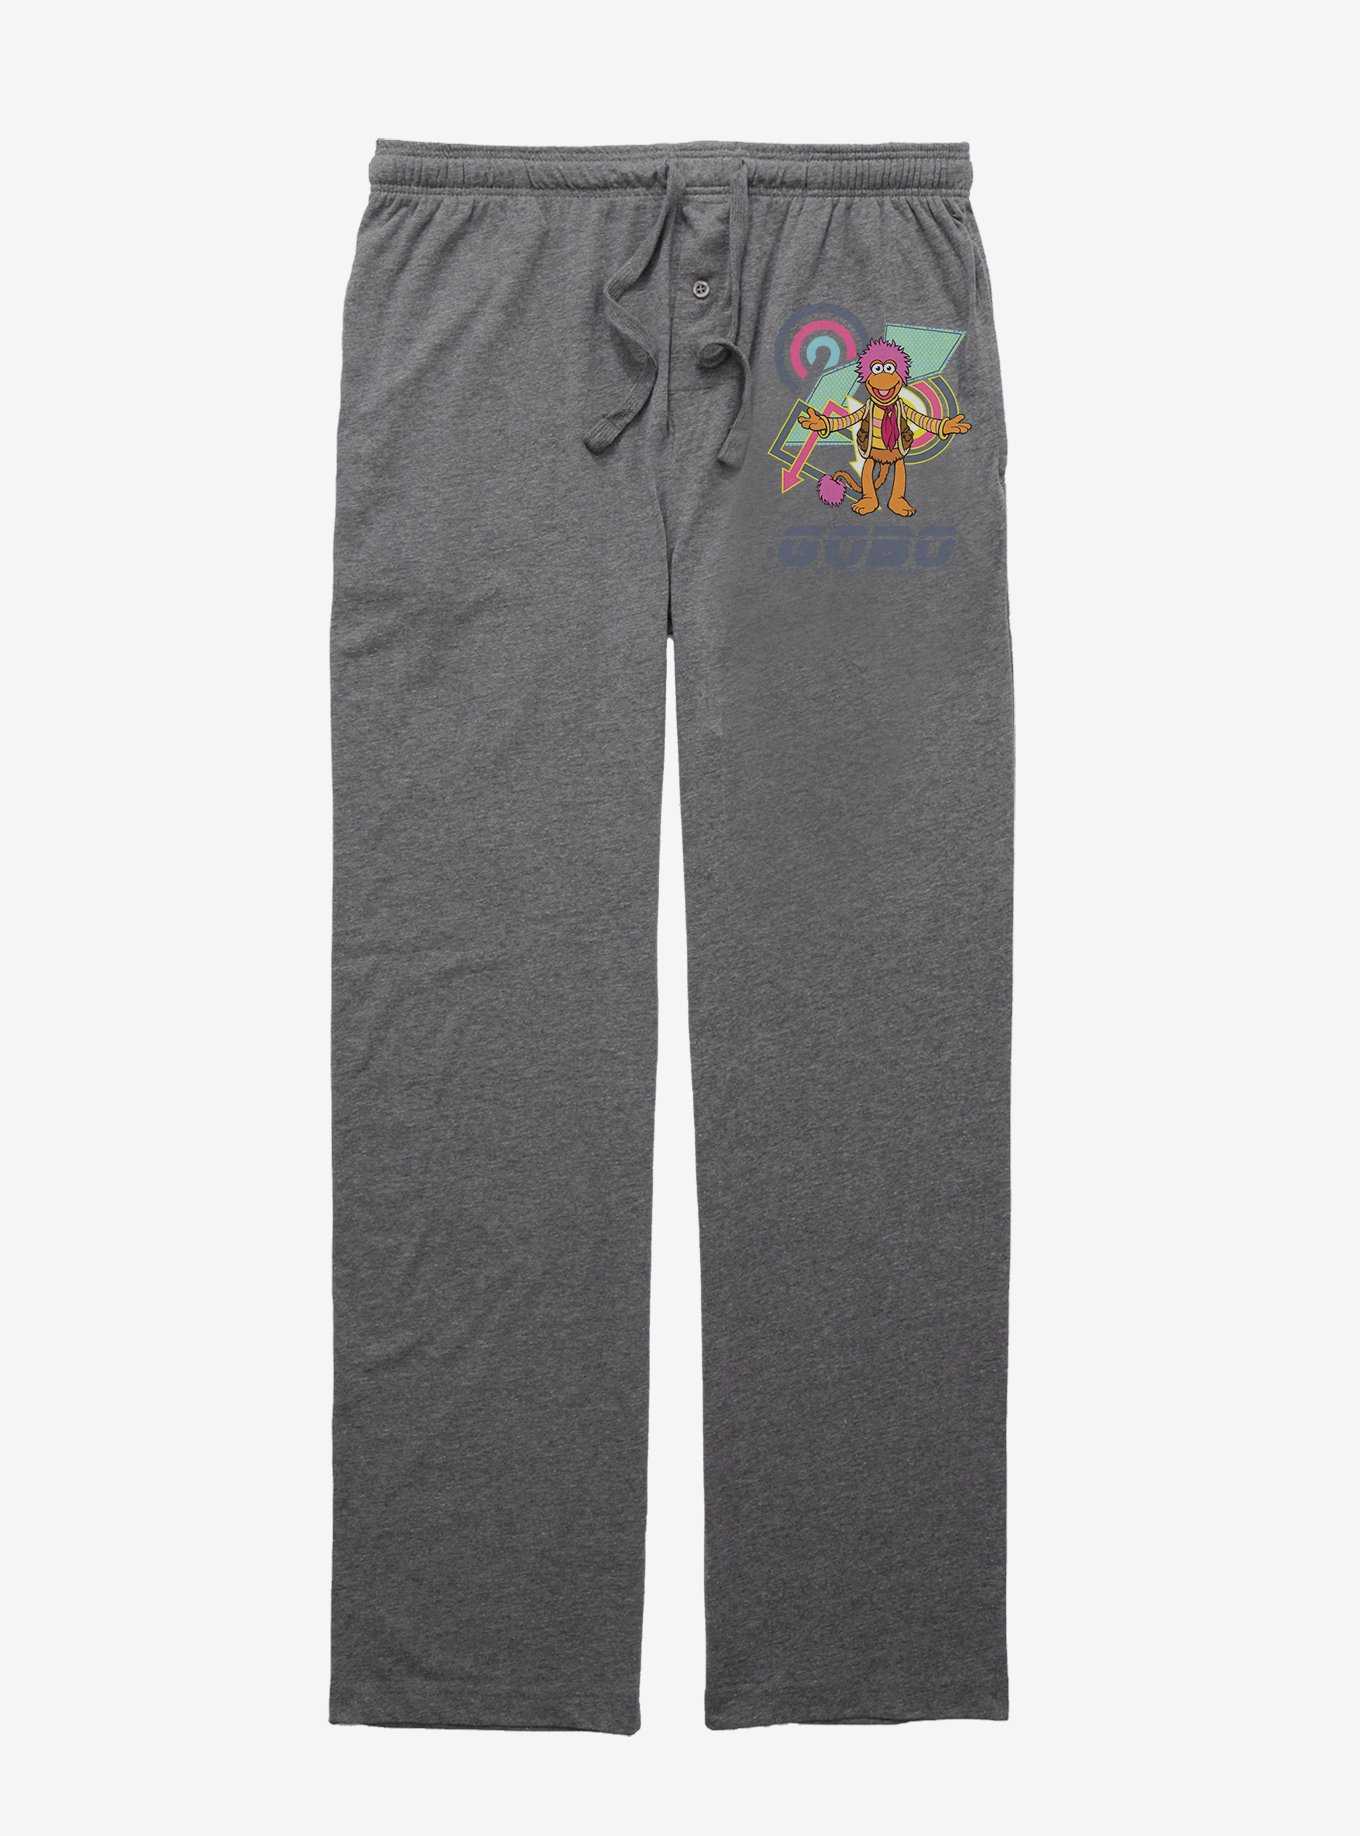 Jim Henson's Fraggle Rock Gobo Pajama Pants, GRAPHITE HEATHER, hi-res